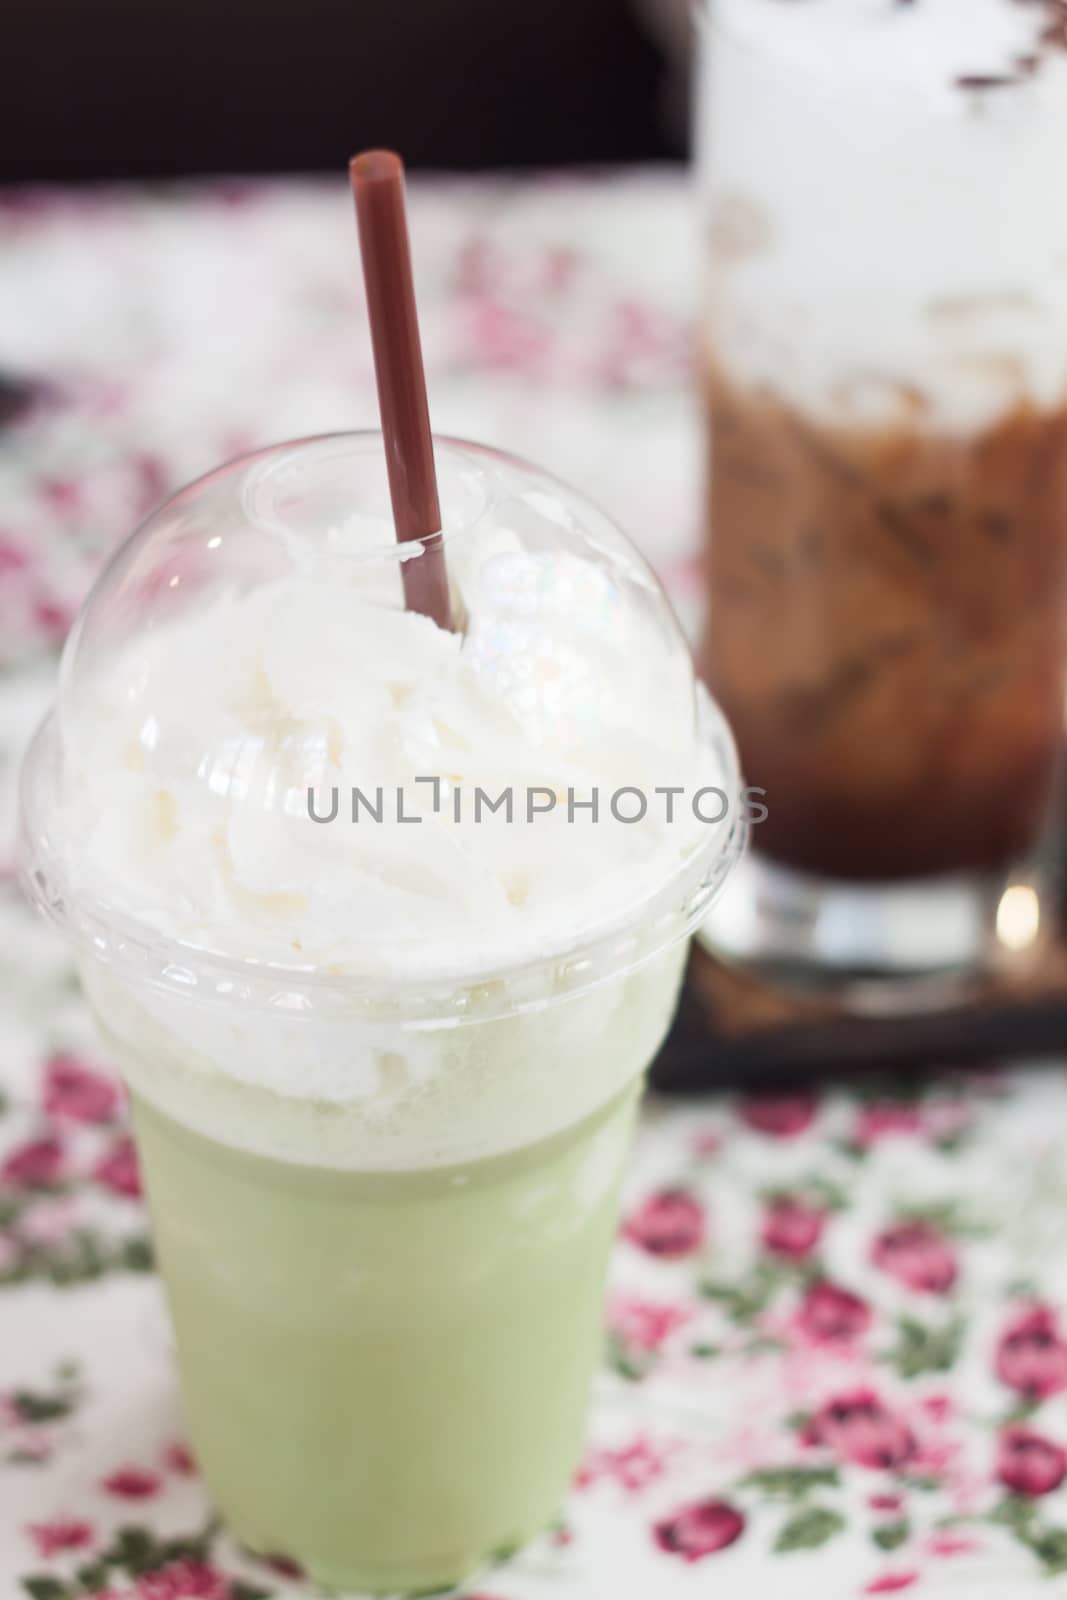 Macha green tea with whipped cream by punsayaporn